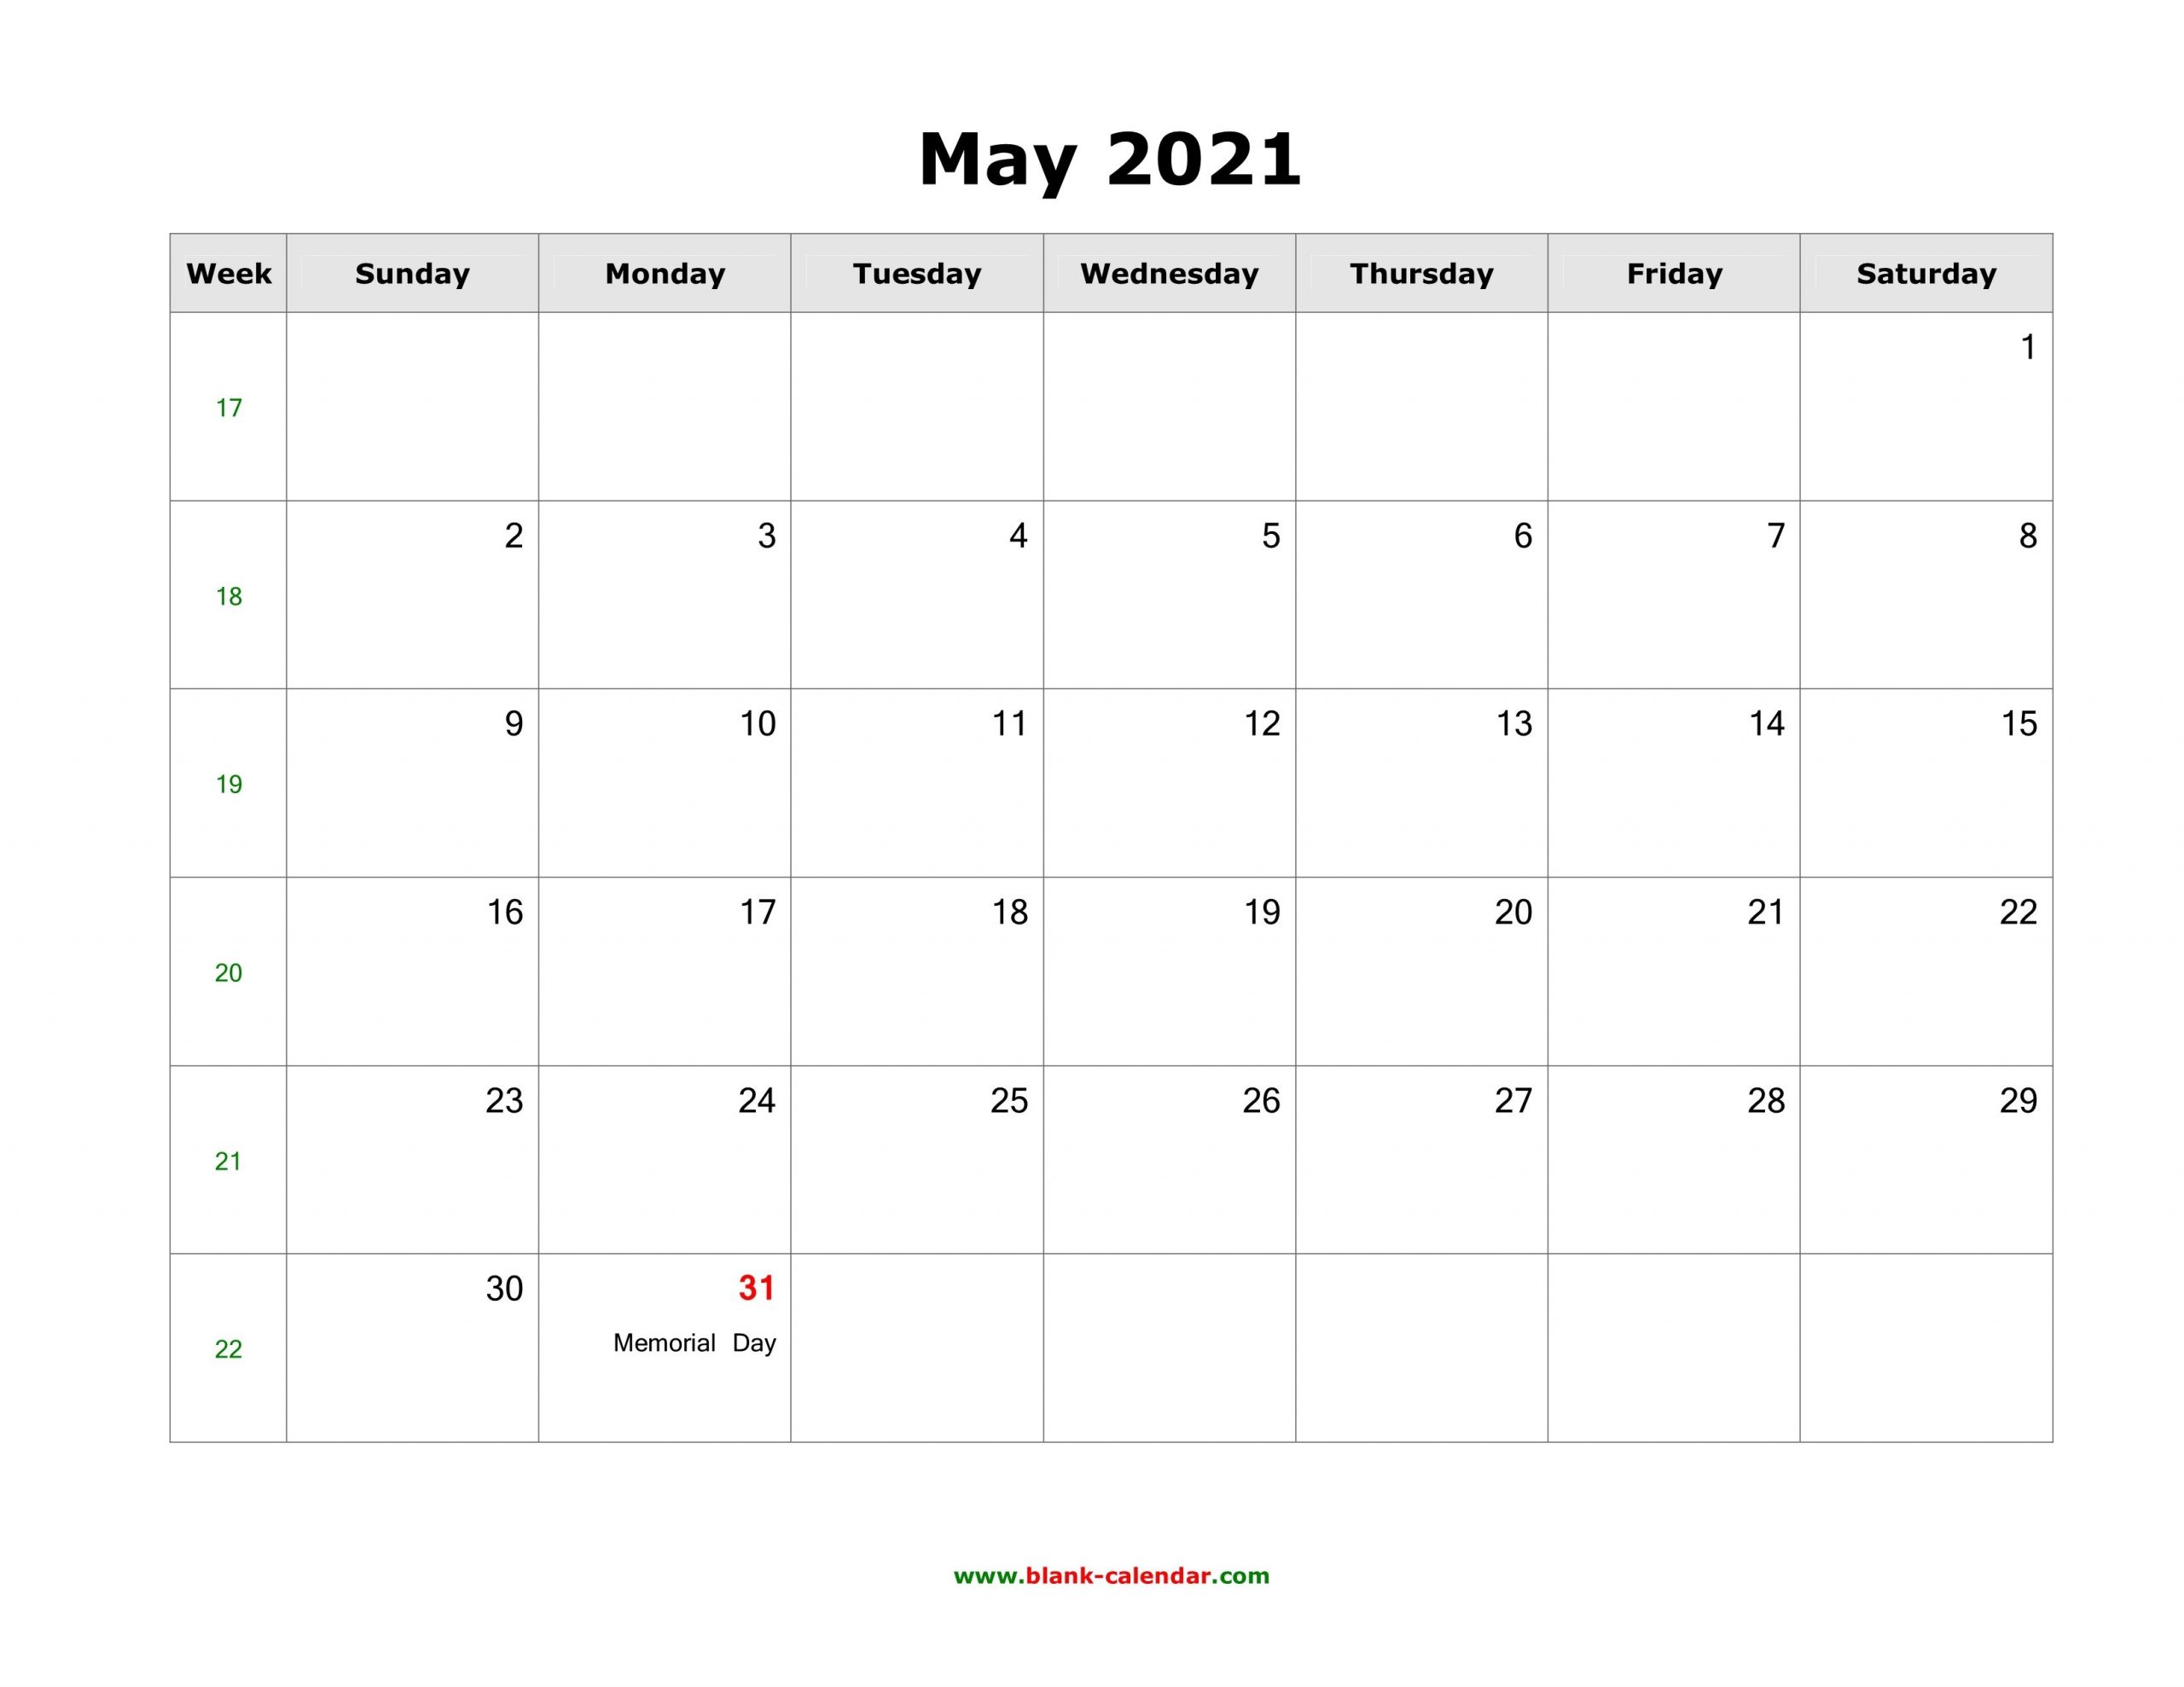 May Holiday Calendar 2021 | Lunar Calendar